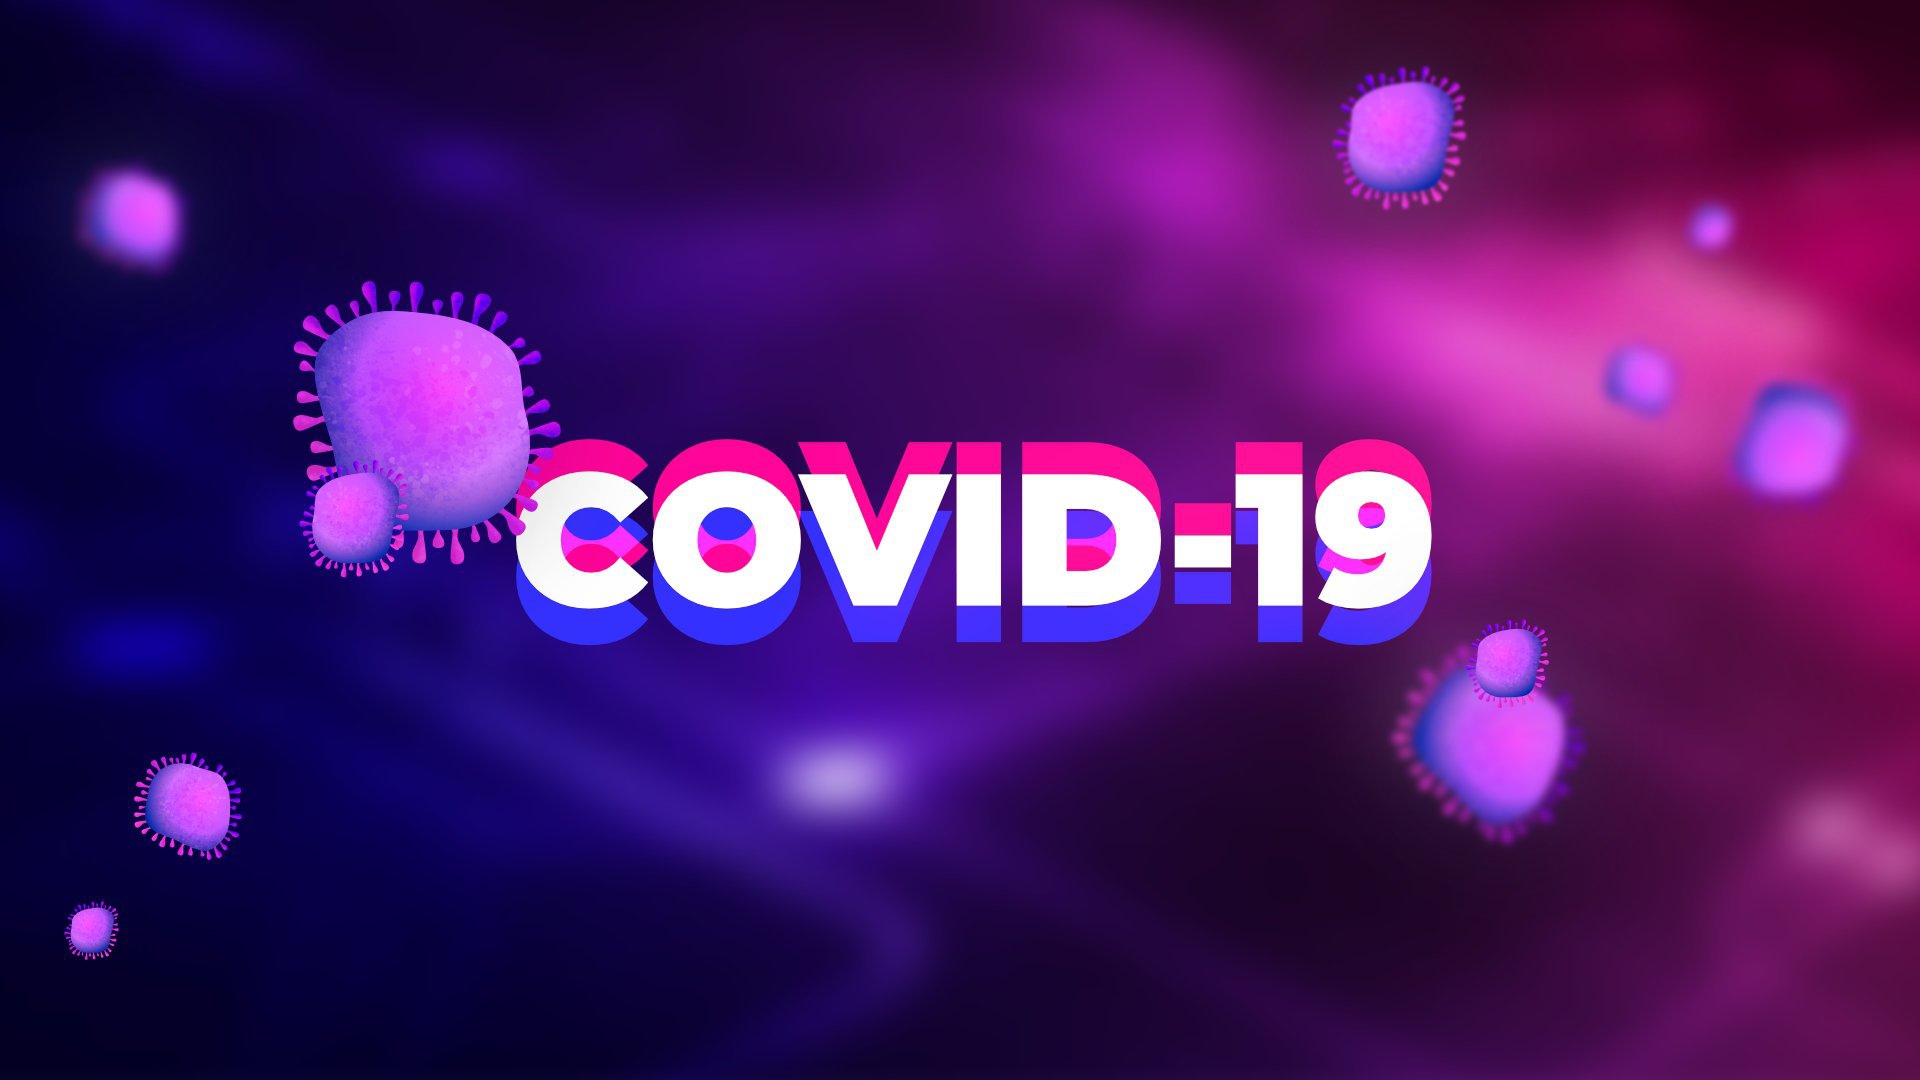 images/2020People_The_inscription_COVID-19_coronavirus_on_a_purple_background_142387_23.jpg